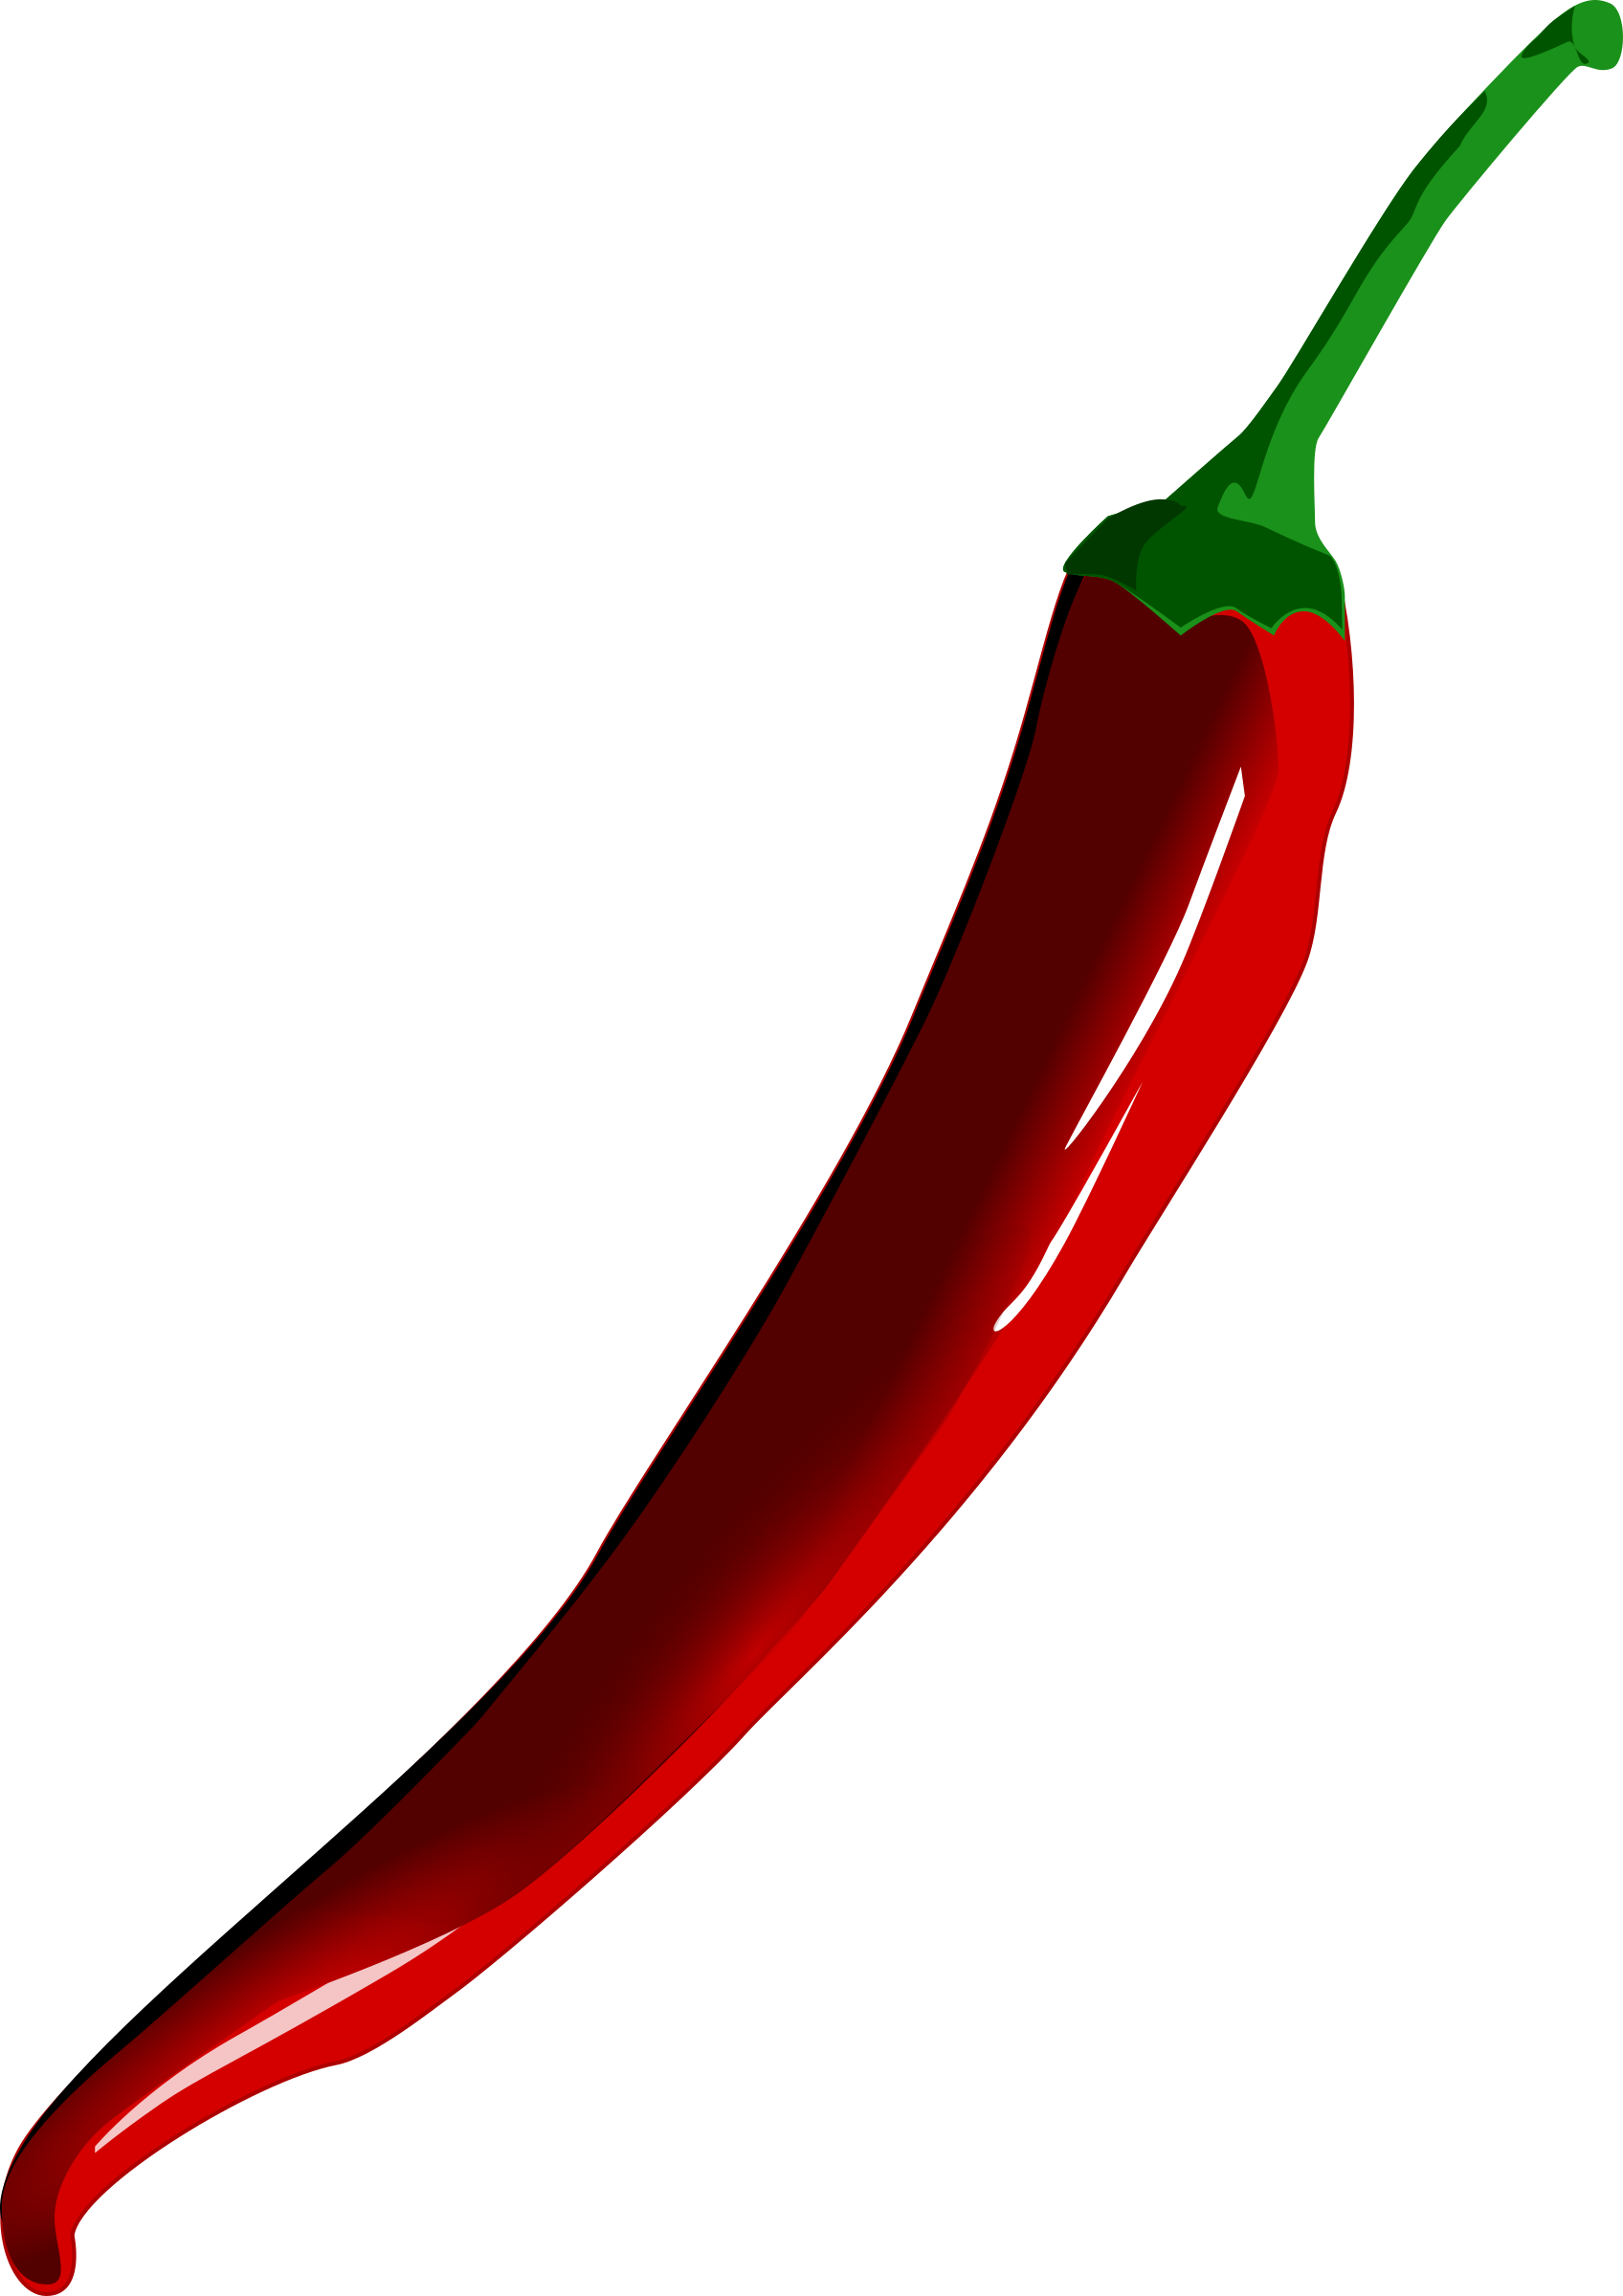 Clipart - Chili pepper